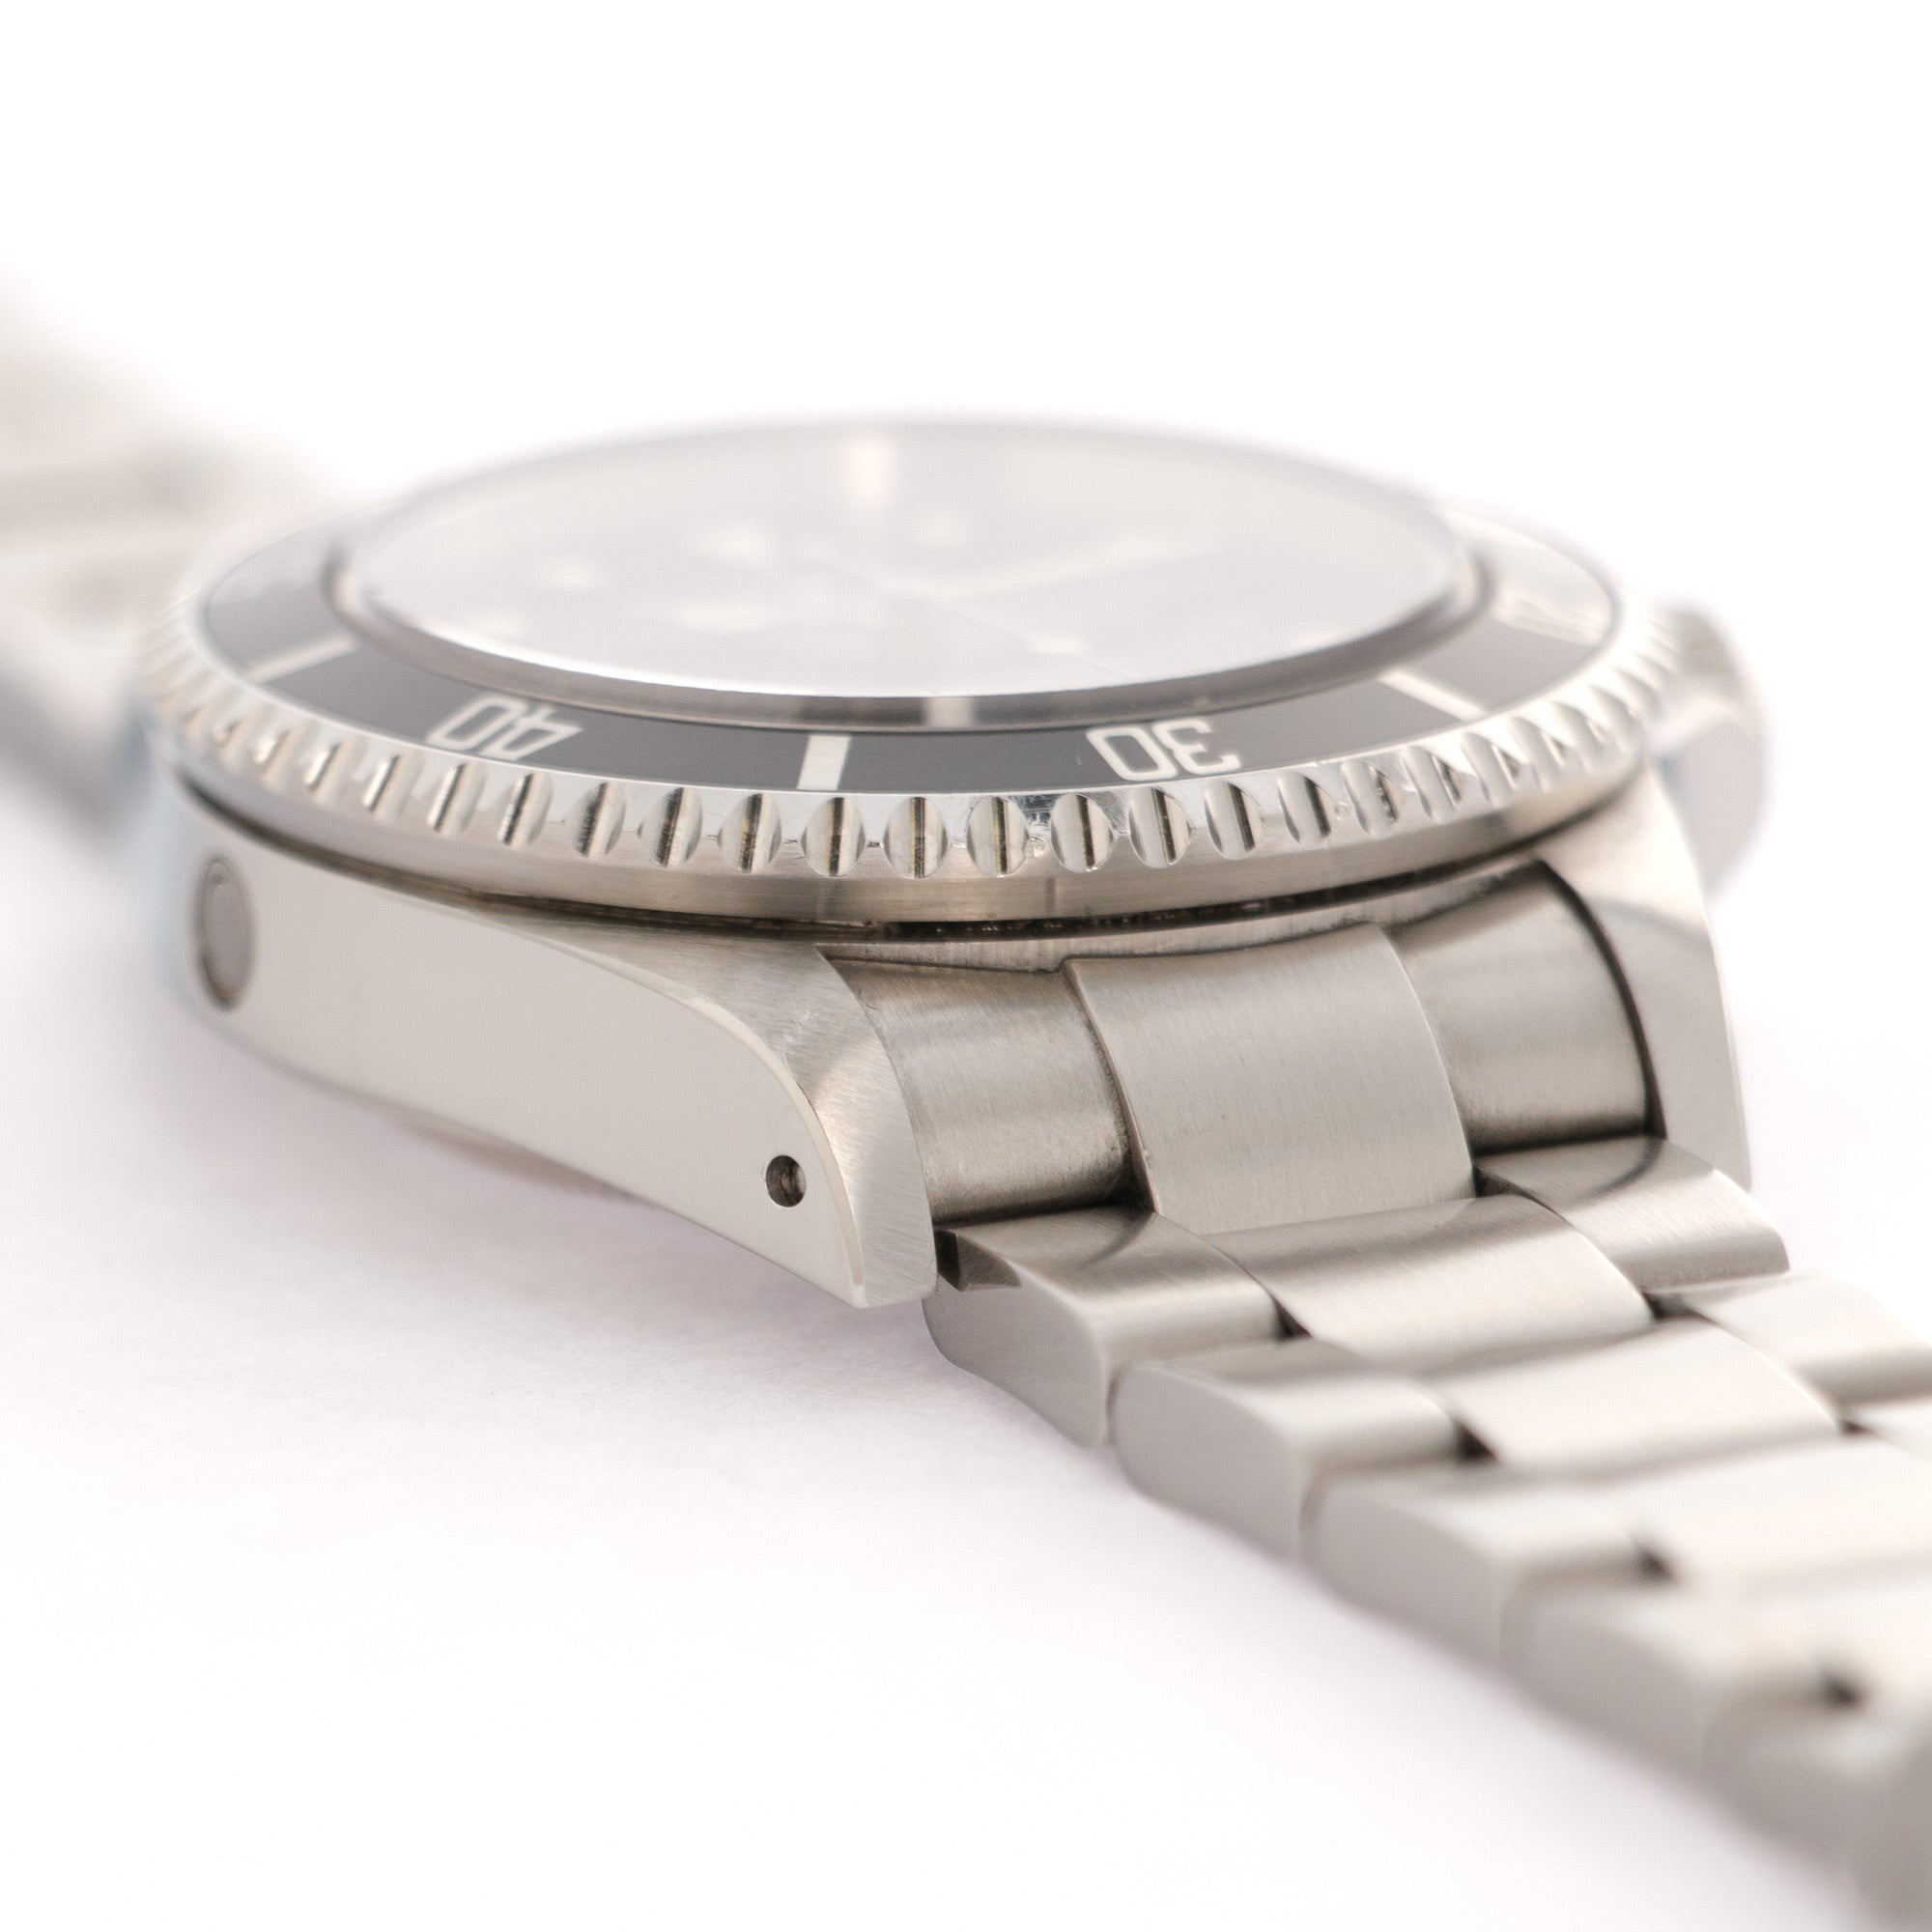 Rolex - Rolex Sea-Dweller Watch Ref. 16660, with Original Warranty Paper - The Keystone Watches